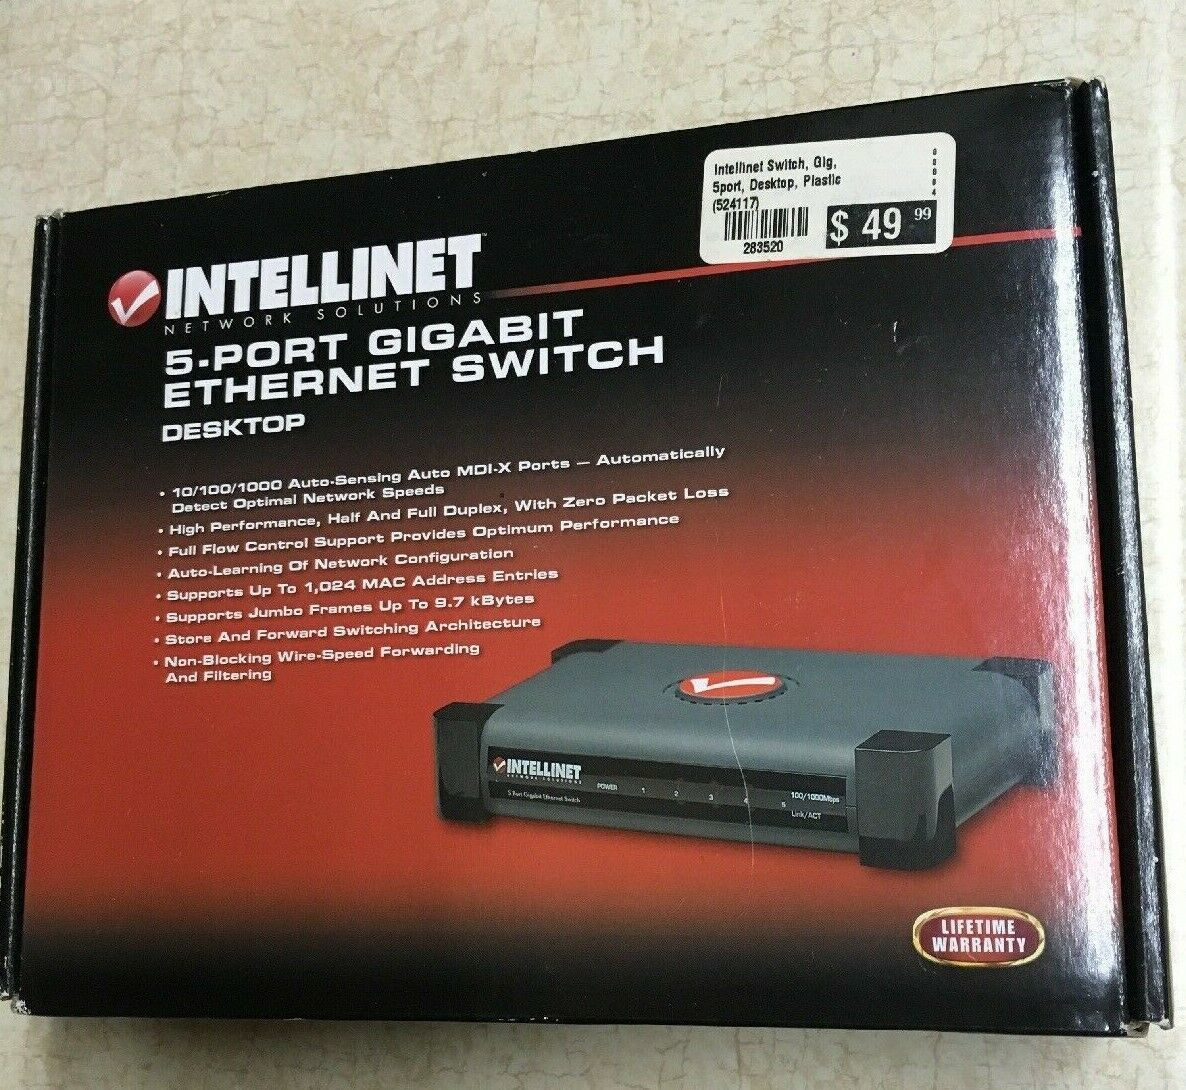 Intellinet 5-port Gigabit Ethernet Switch 10/100/1000 524117 Desktop - Brand New - $28.99